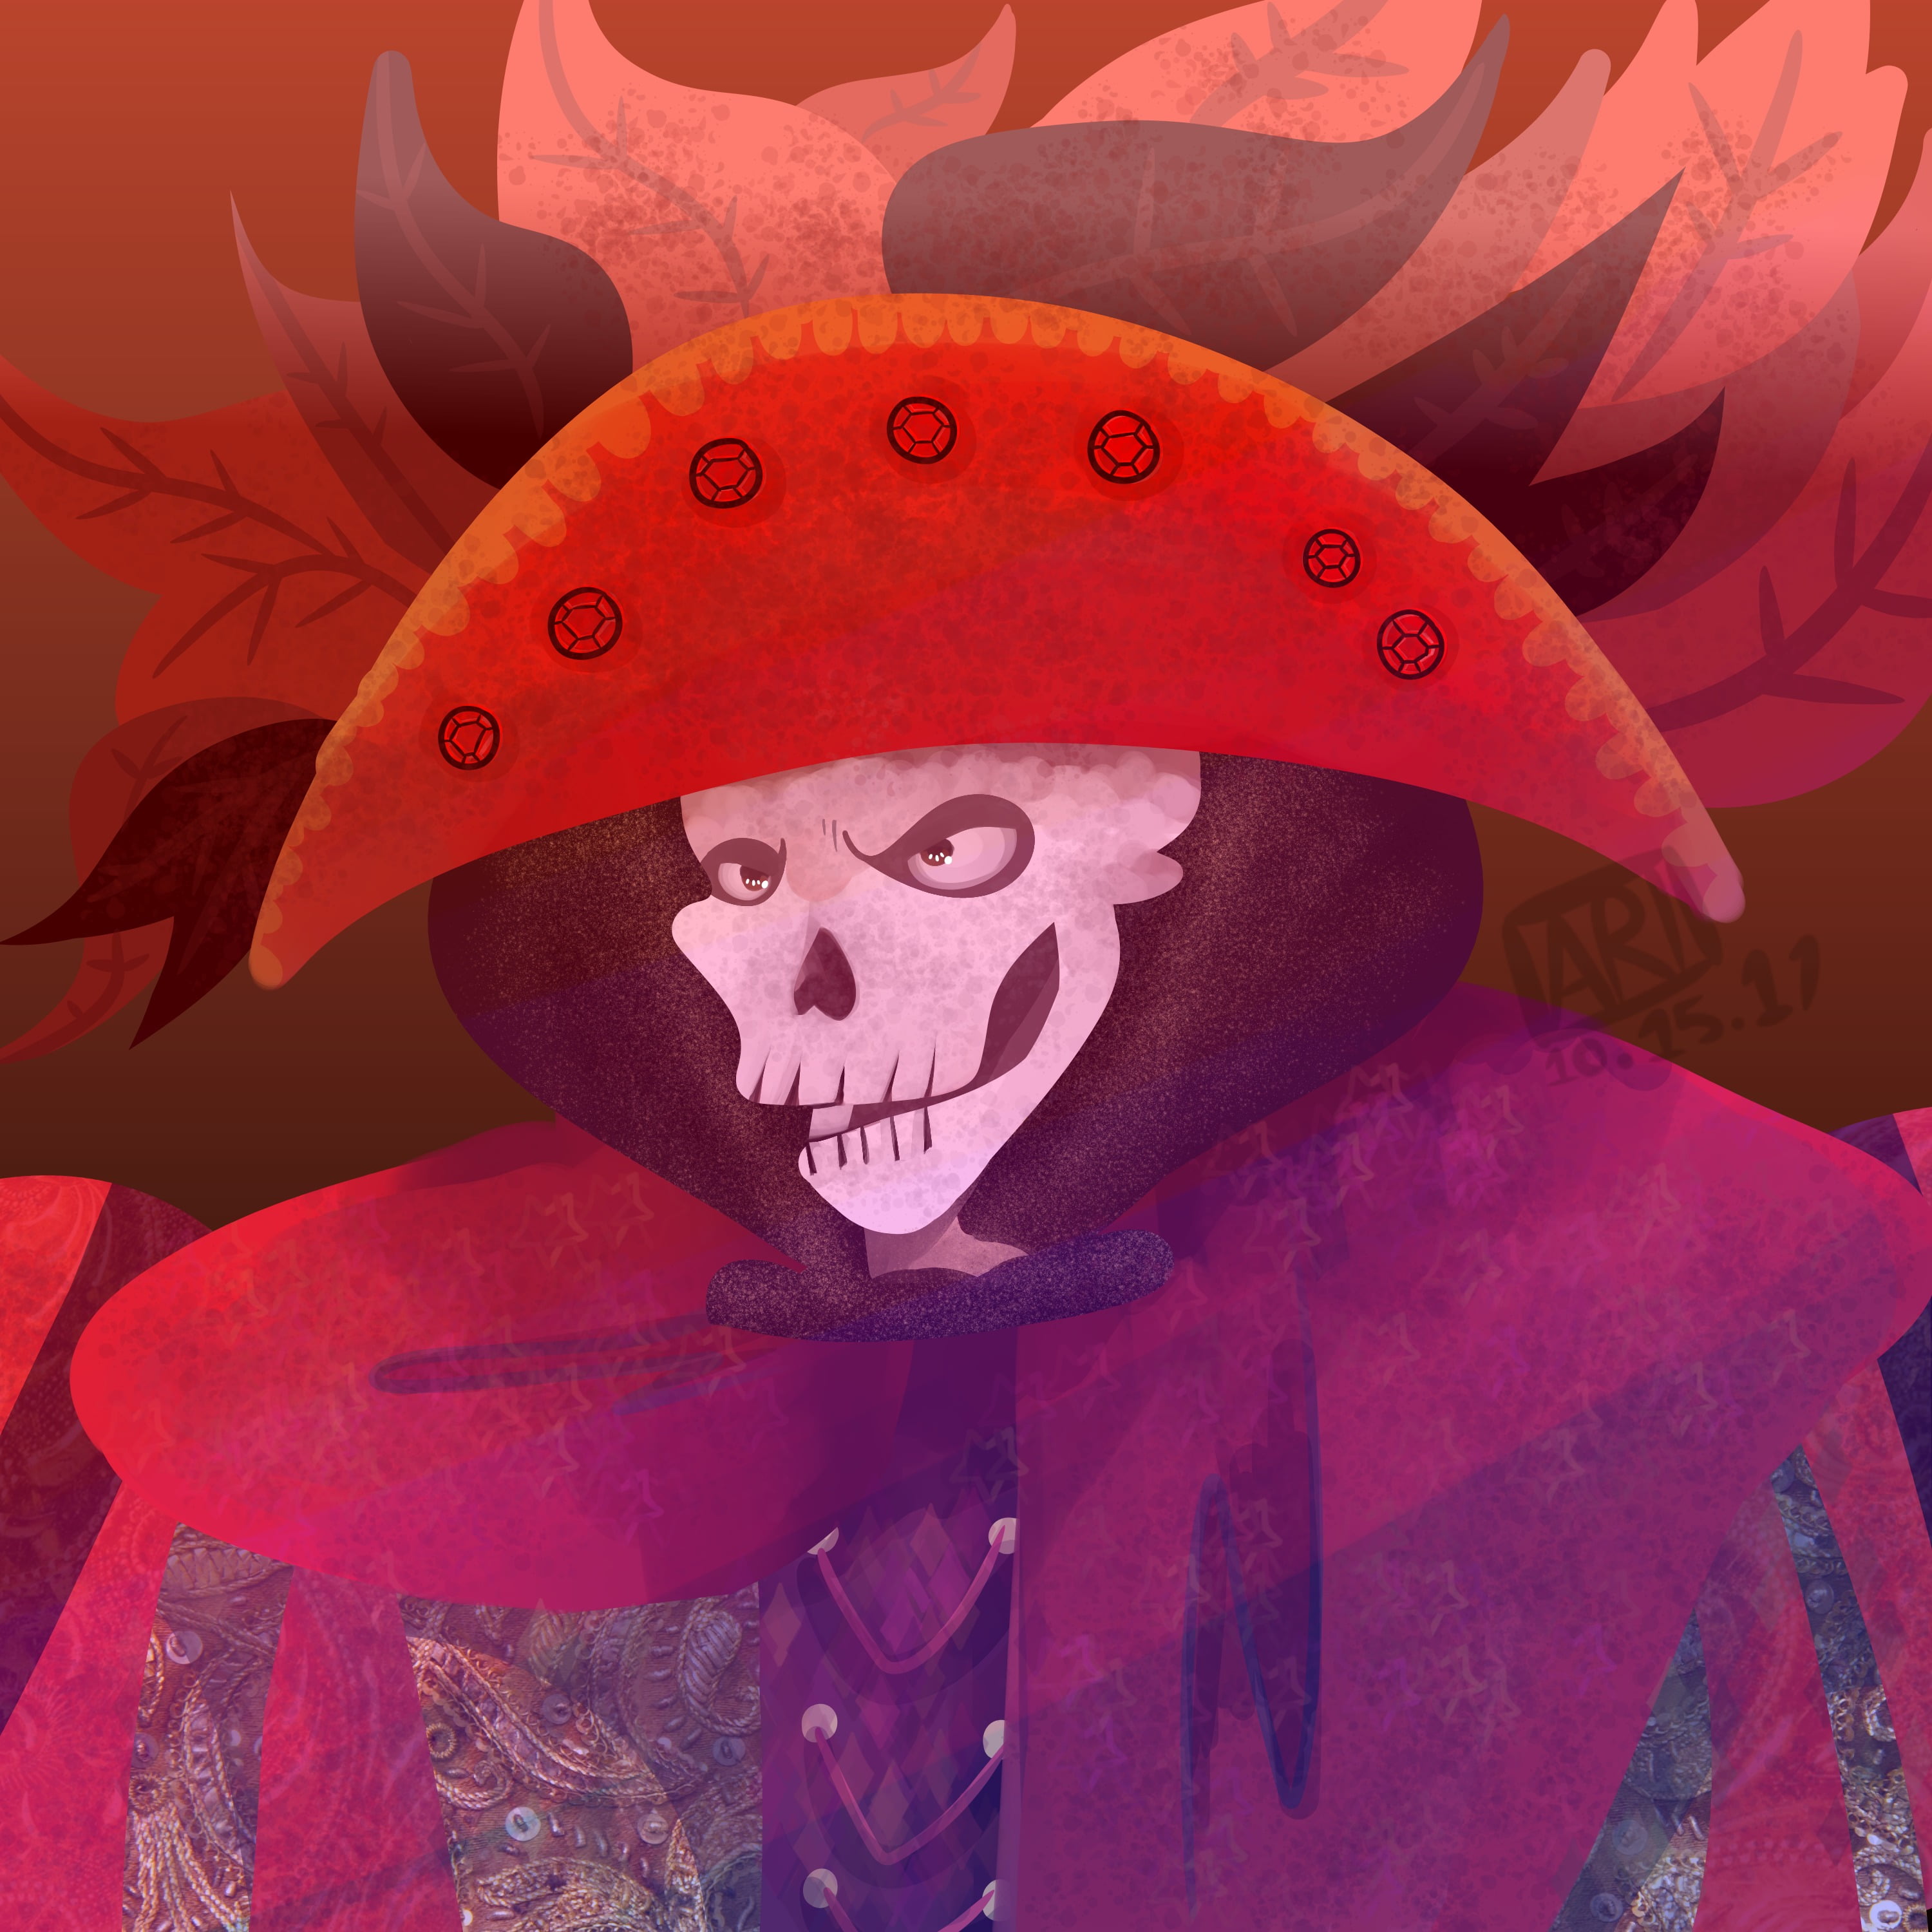 artwork, skull, hat, digital art, illustration, leaves, purple